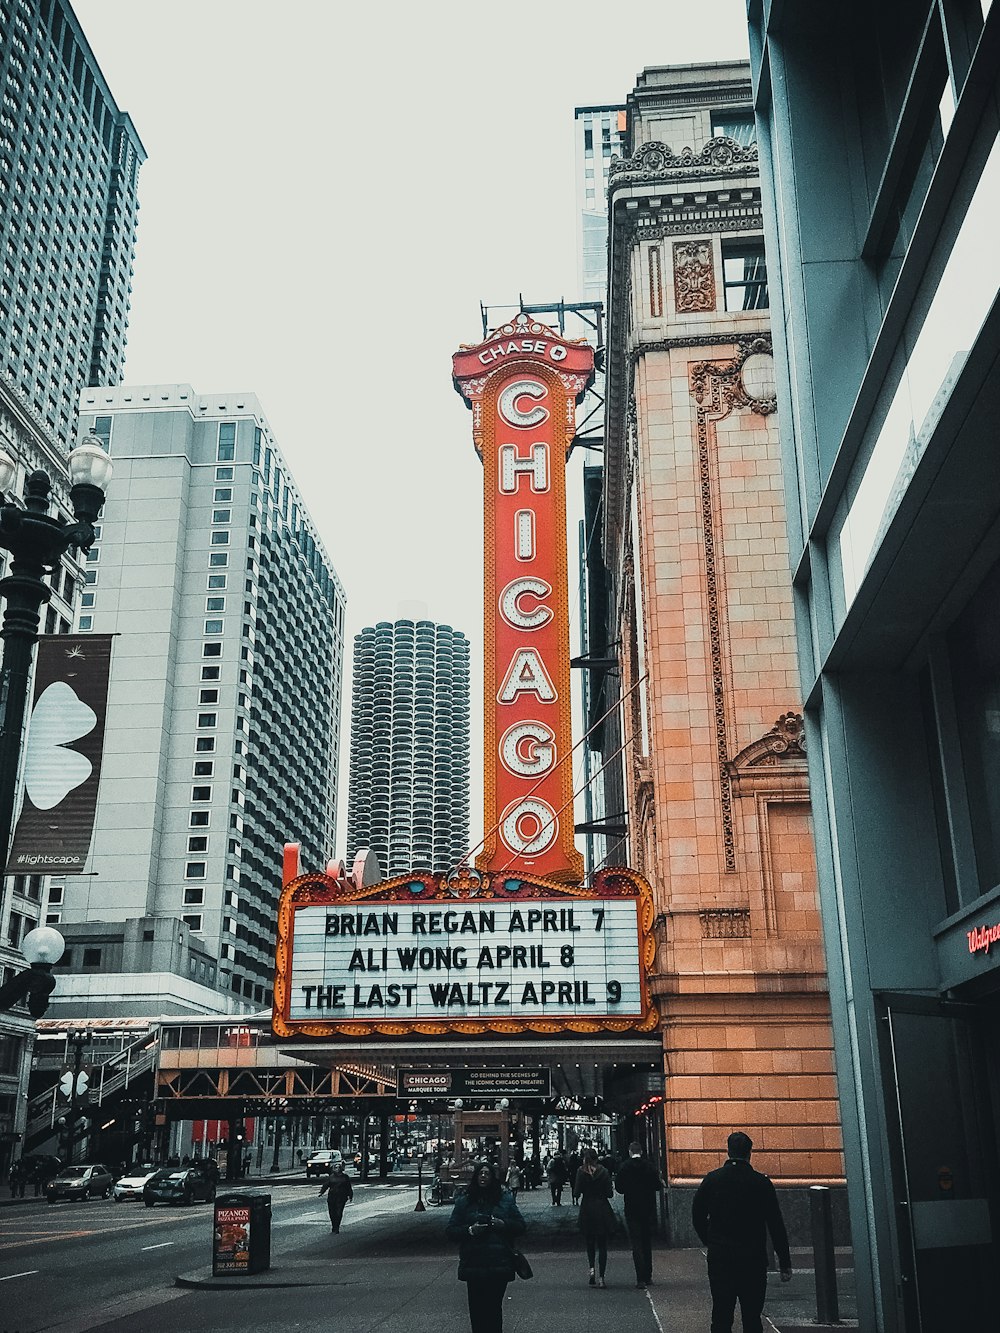 Chicago theater showing Brain Regan on April 7